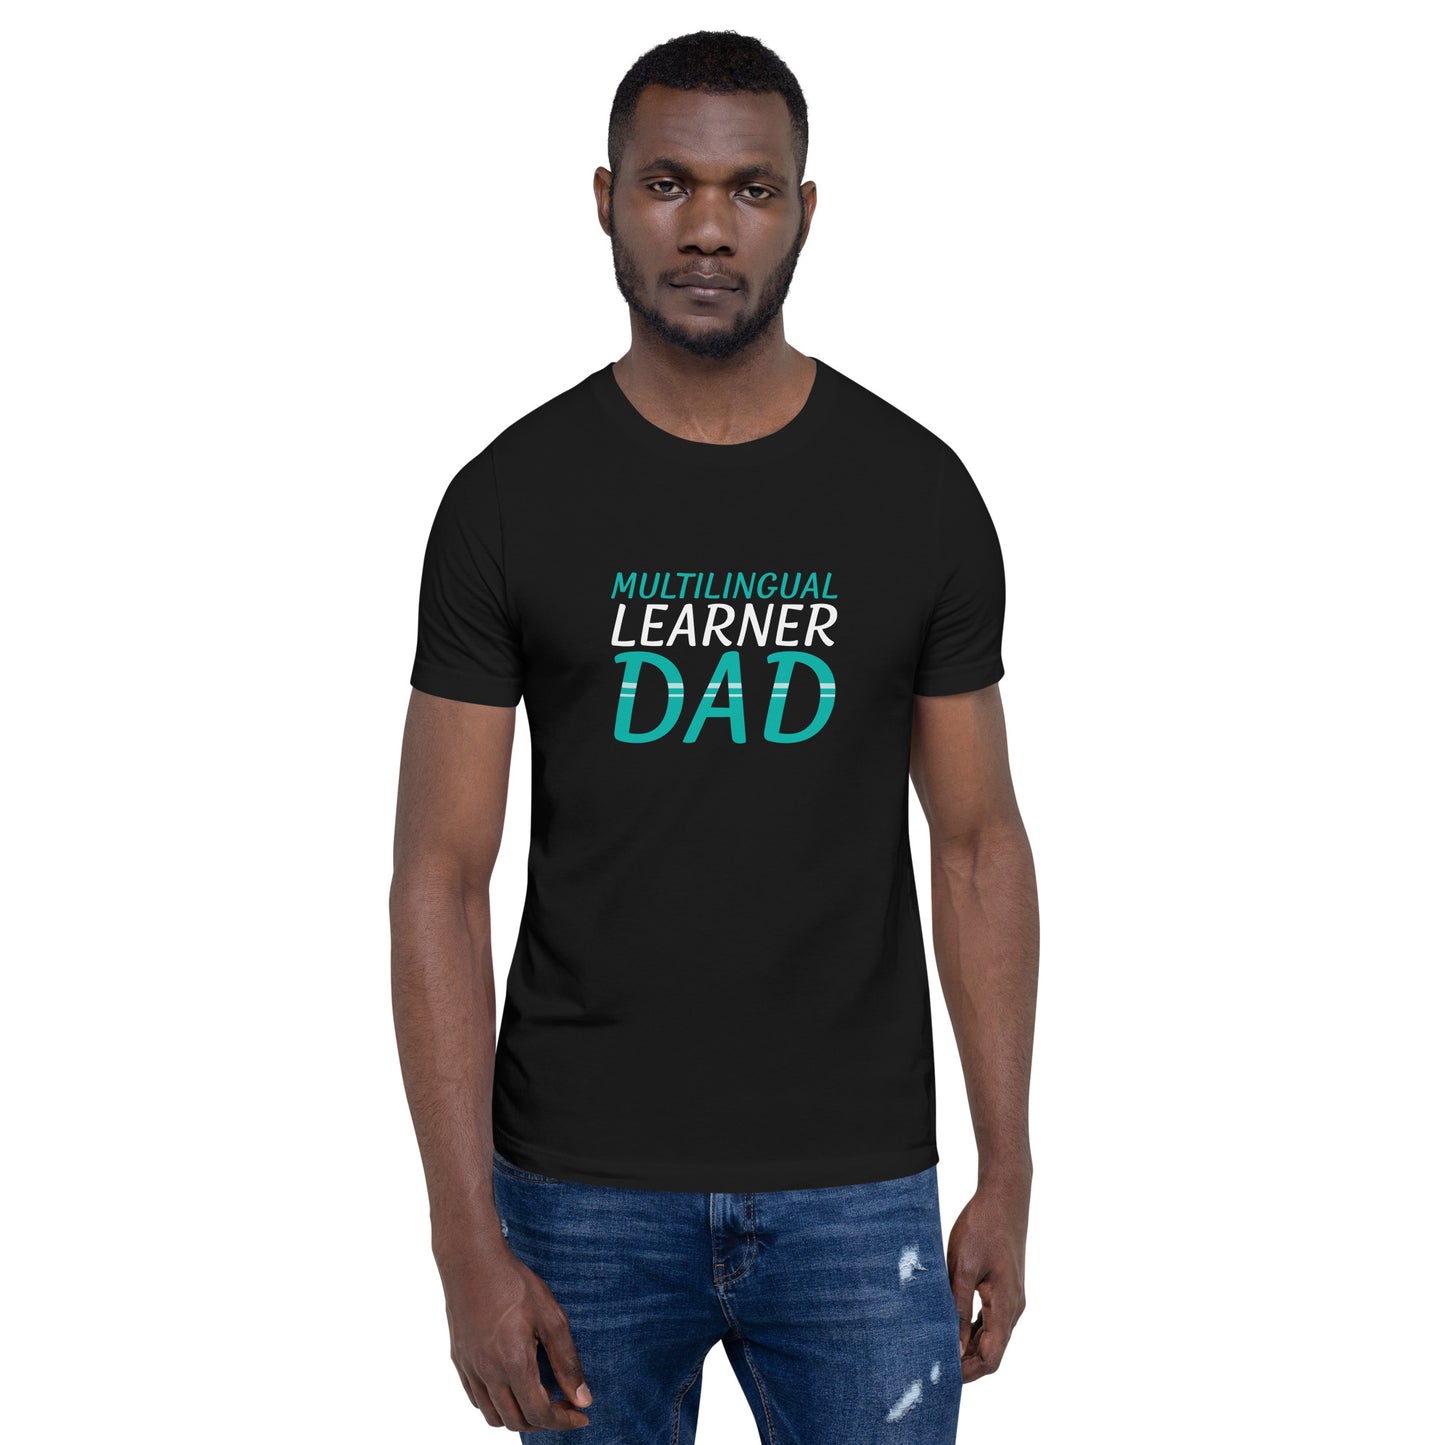 Multilingual learner DAD t-shirt.